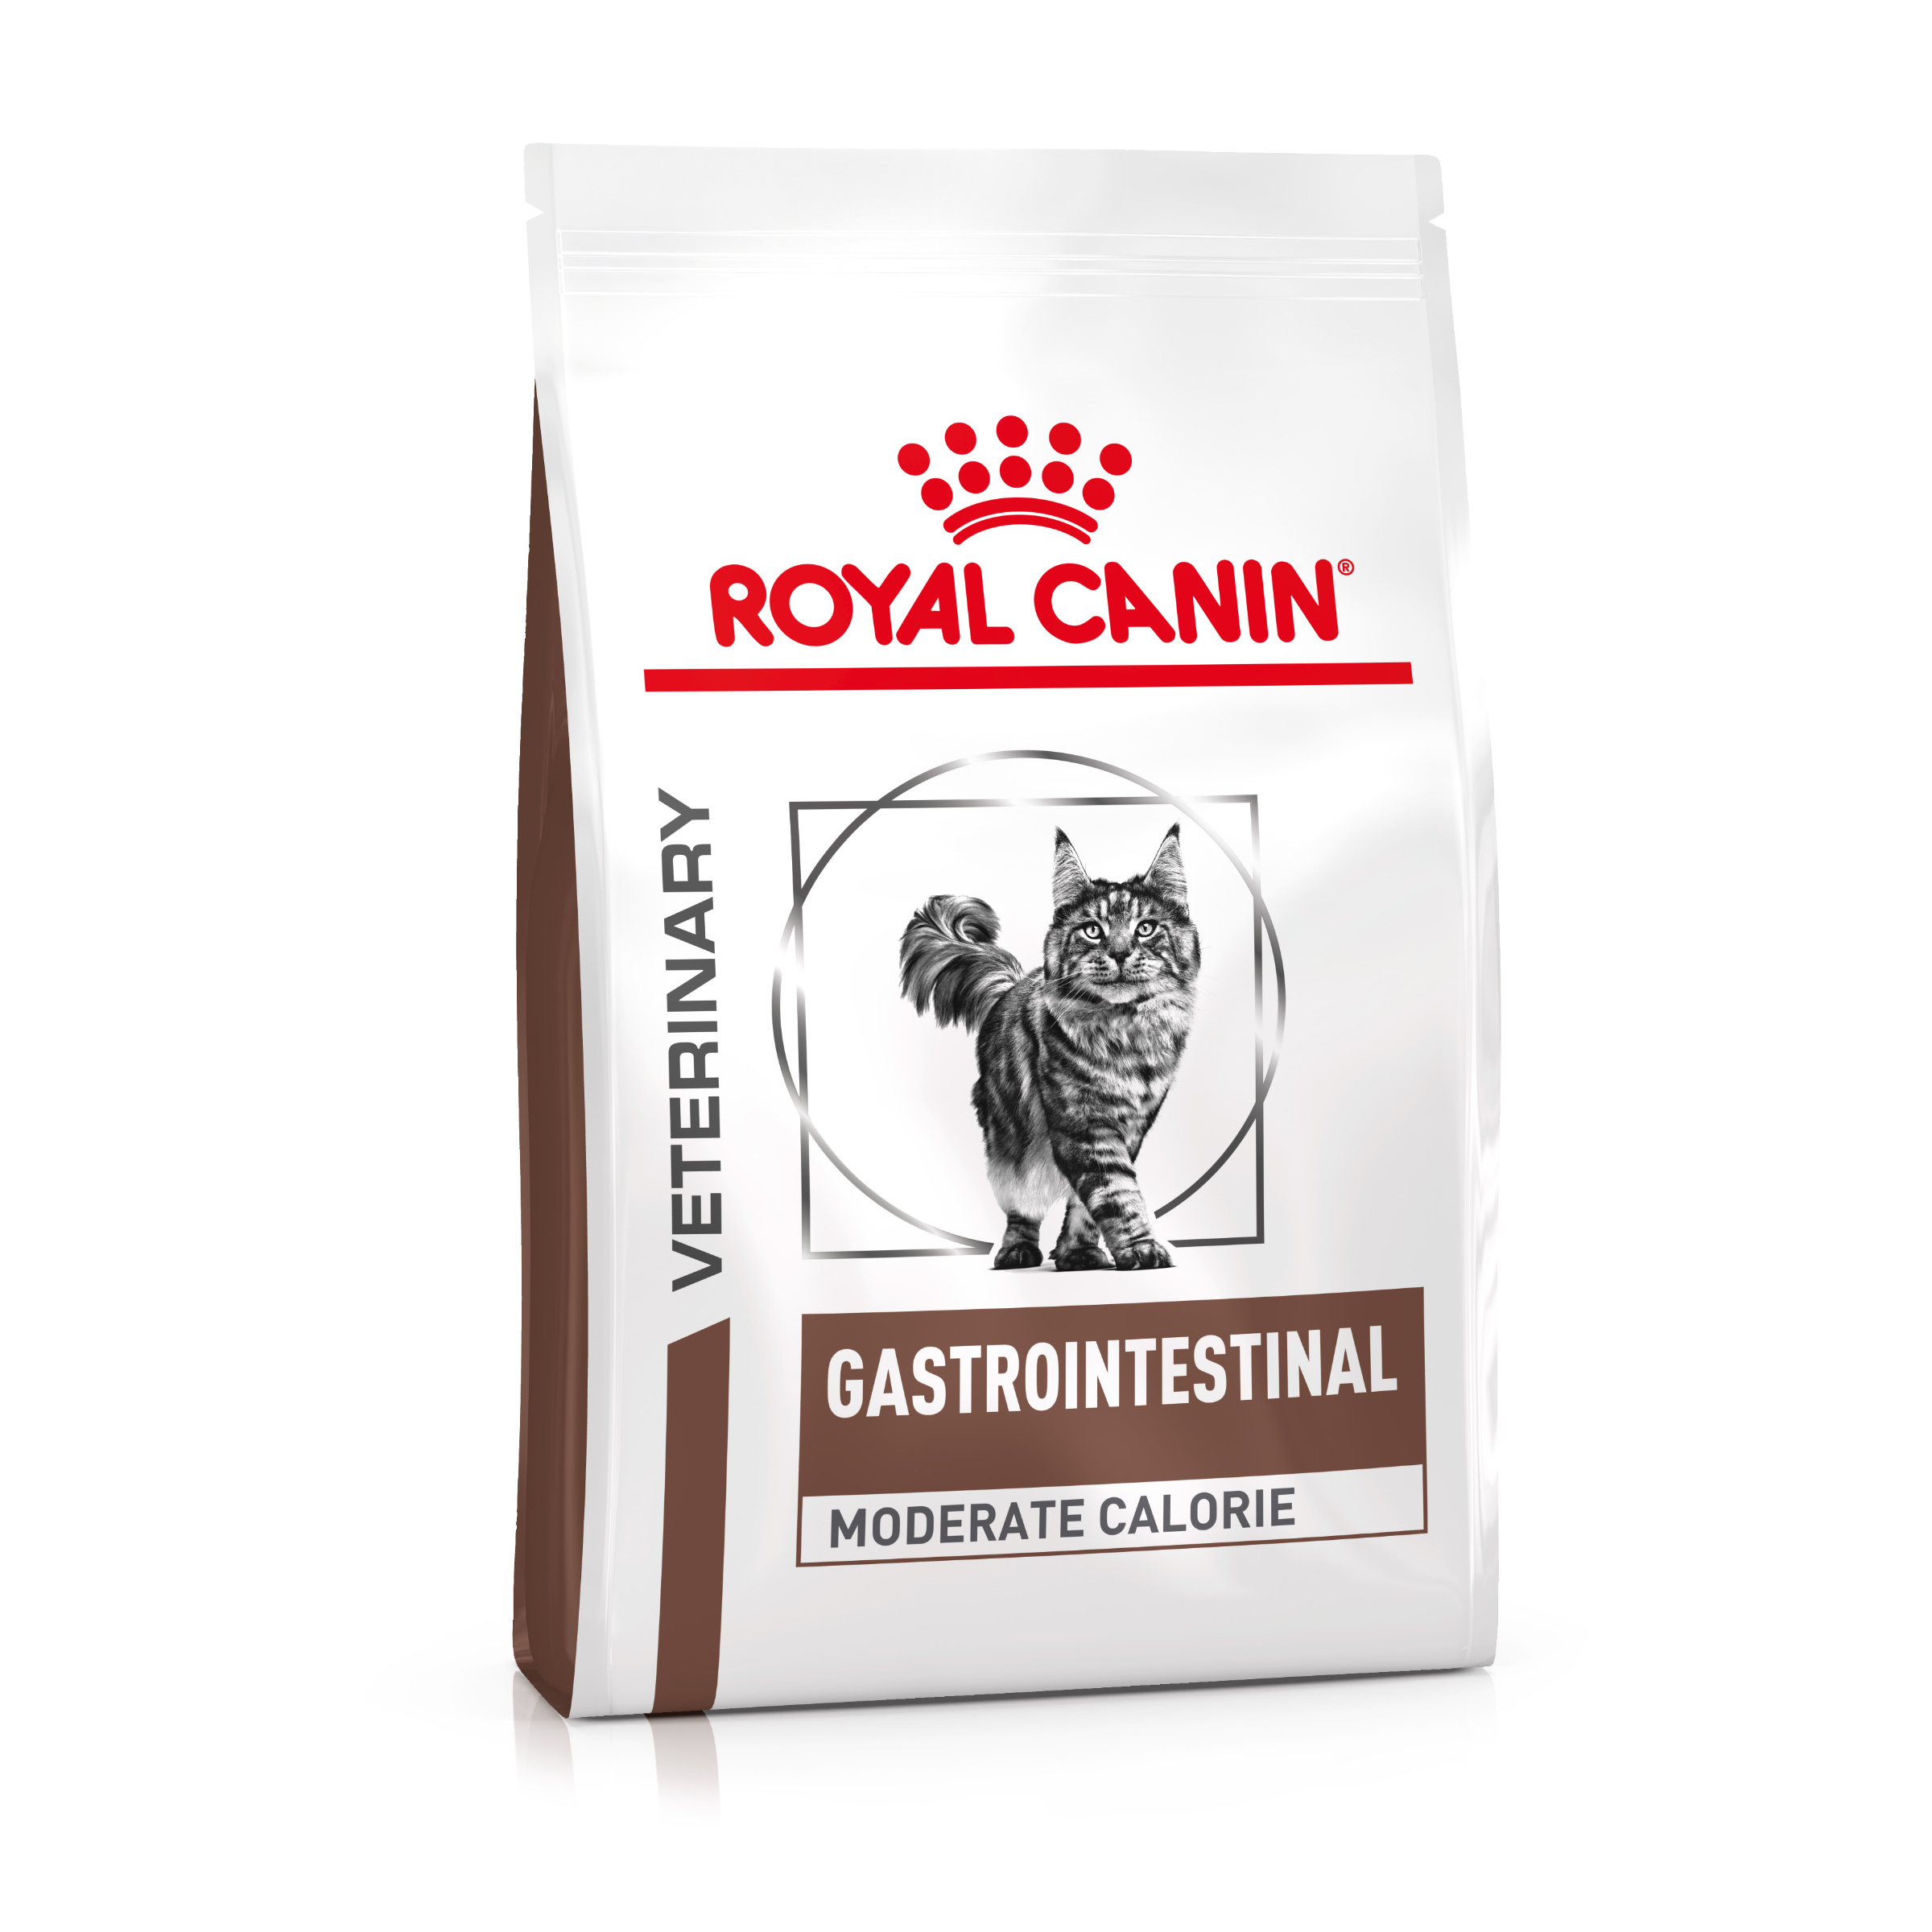 ROYAL CANIN Veterinary GASTROINTESTINAL MODERATE CALORIE Trockenfutter für Katzen 4 kg (Katze)